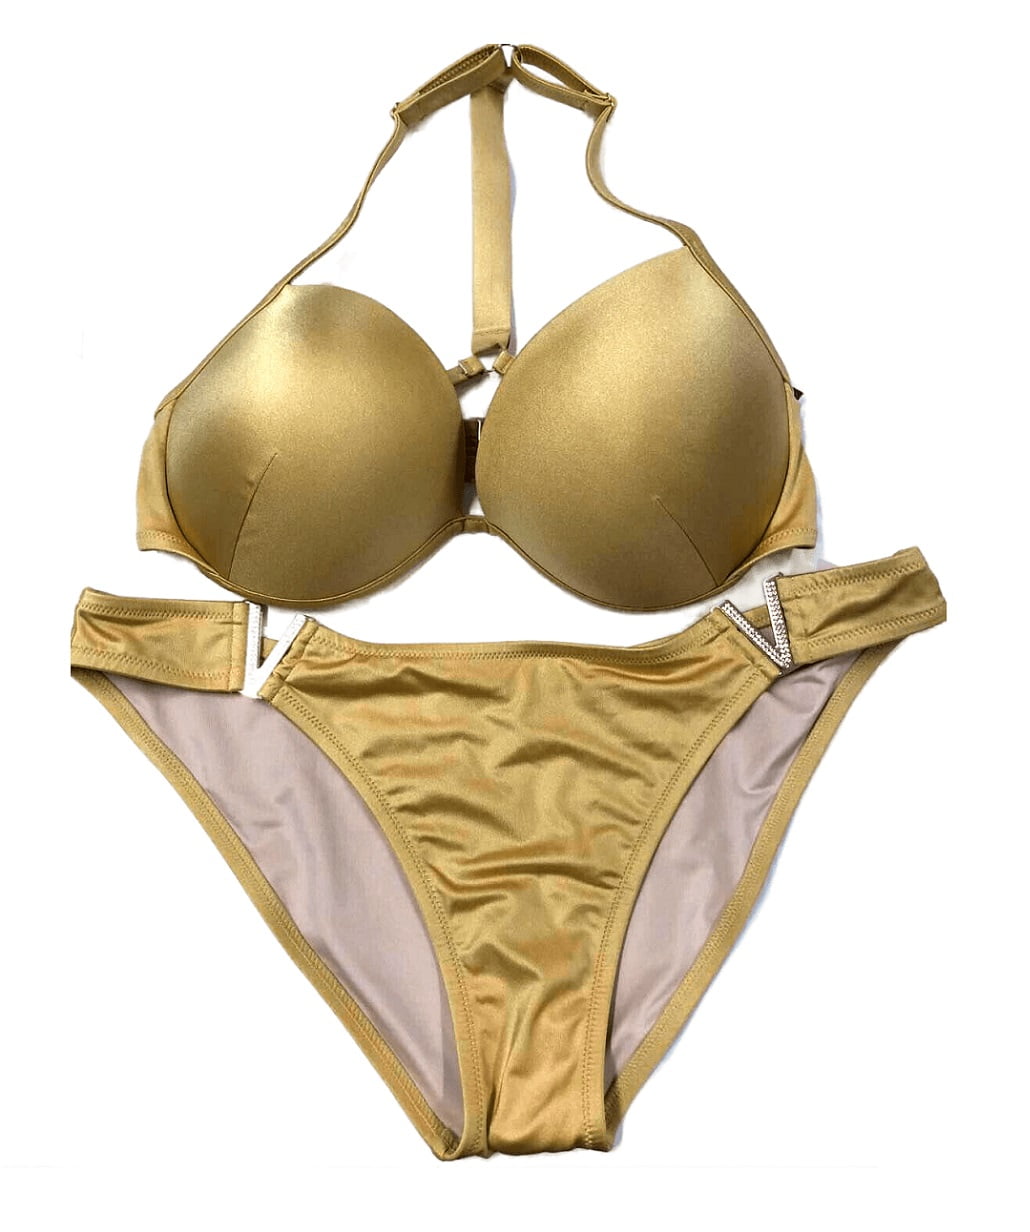 NIP -- VICTORIA'S SECRET Sparkly Peach Cheeky Bikini Bottom -- XS